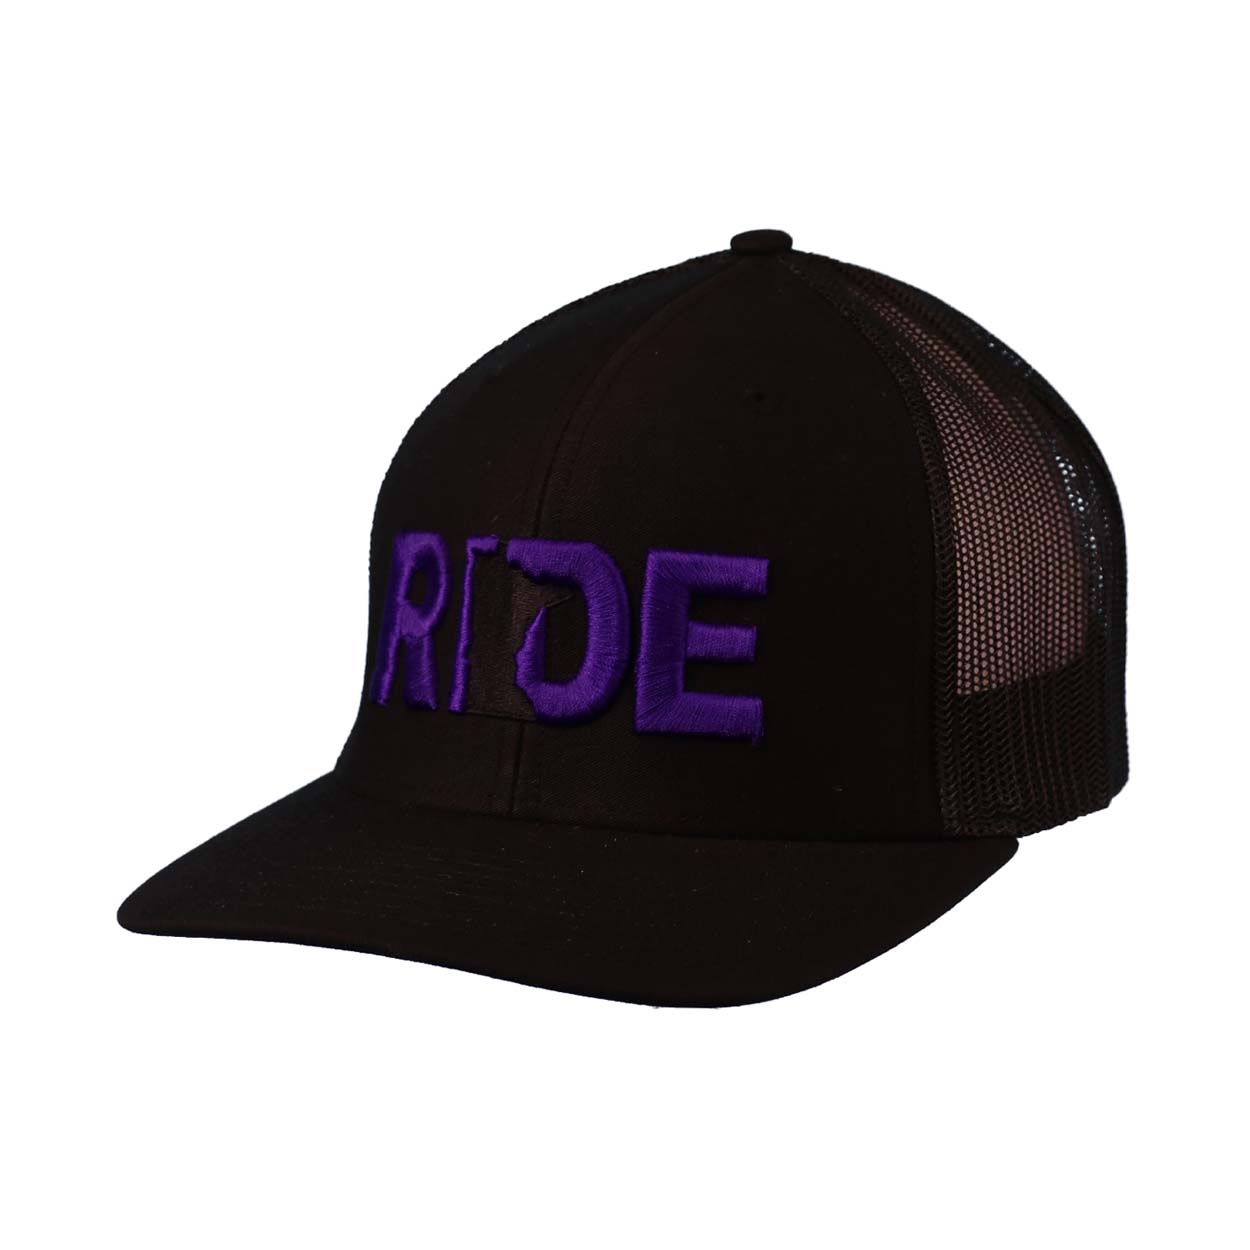 Ride Minnesota Classic Embroidered Snapback Trucker Hat Black/Purple